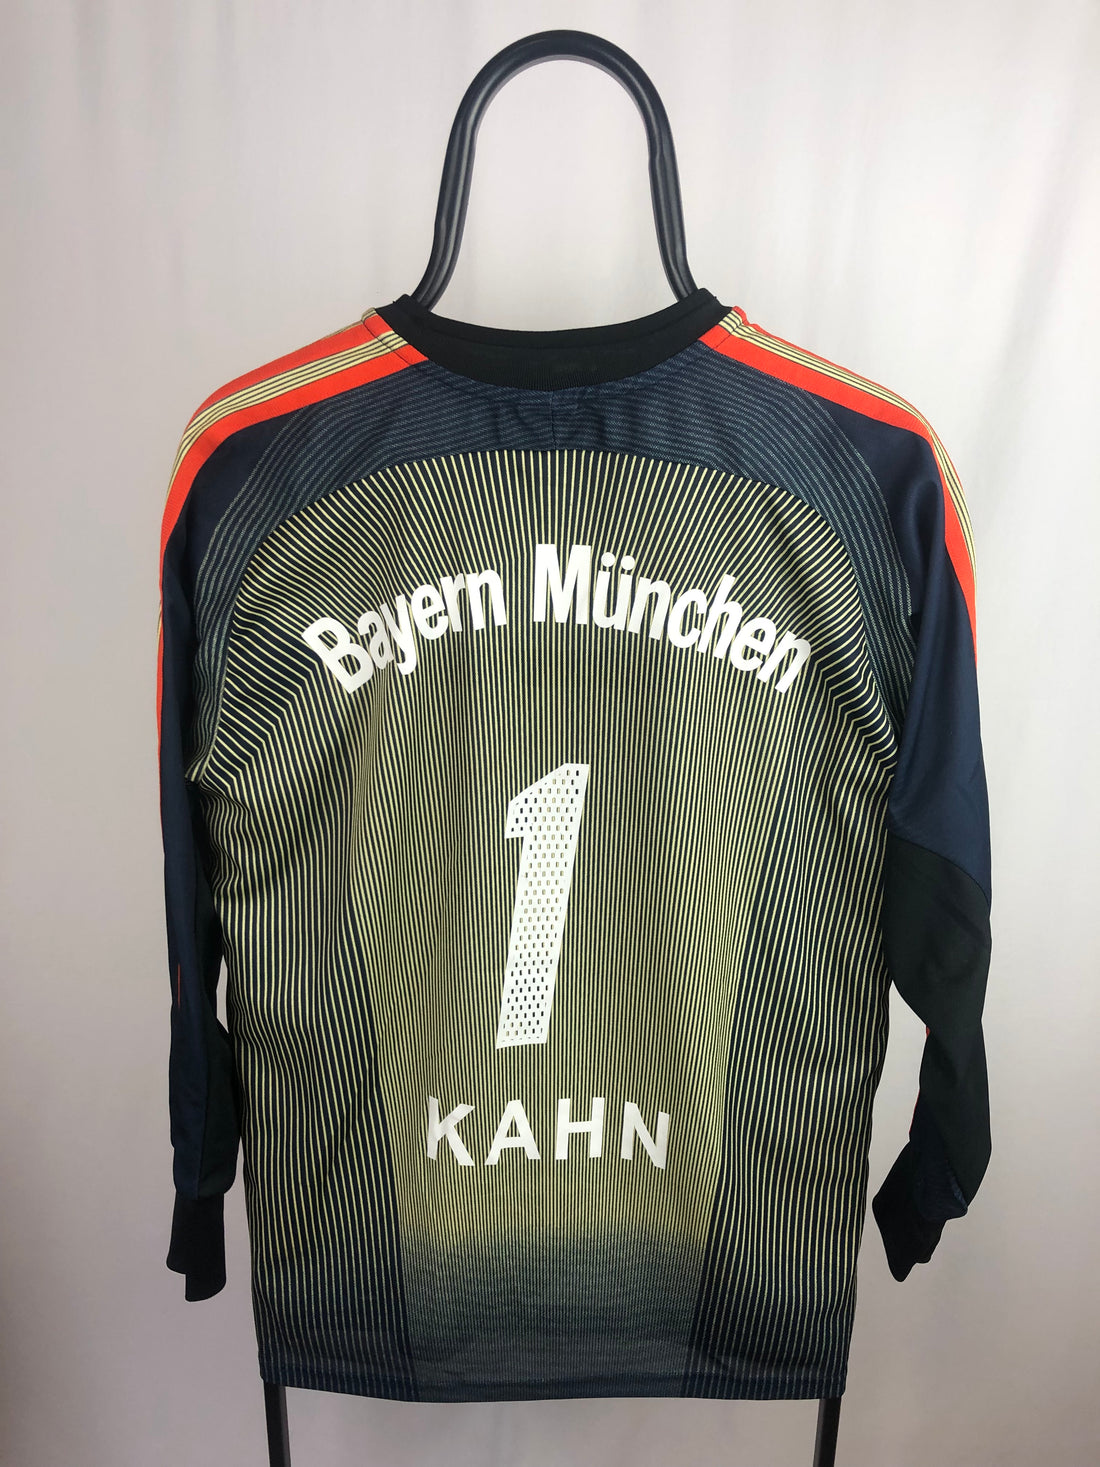 Oliver Kahn Bayern Munich 03/04 Goalkeeper Shirt - S